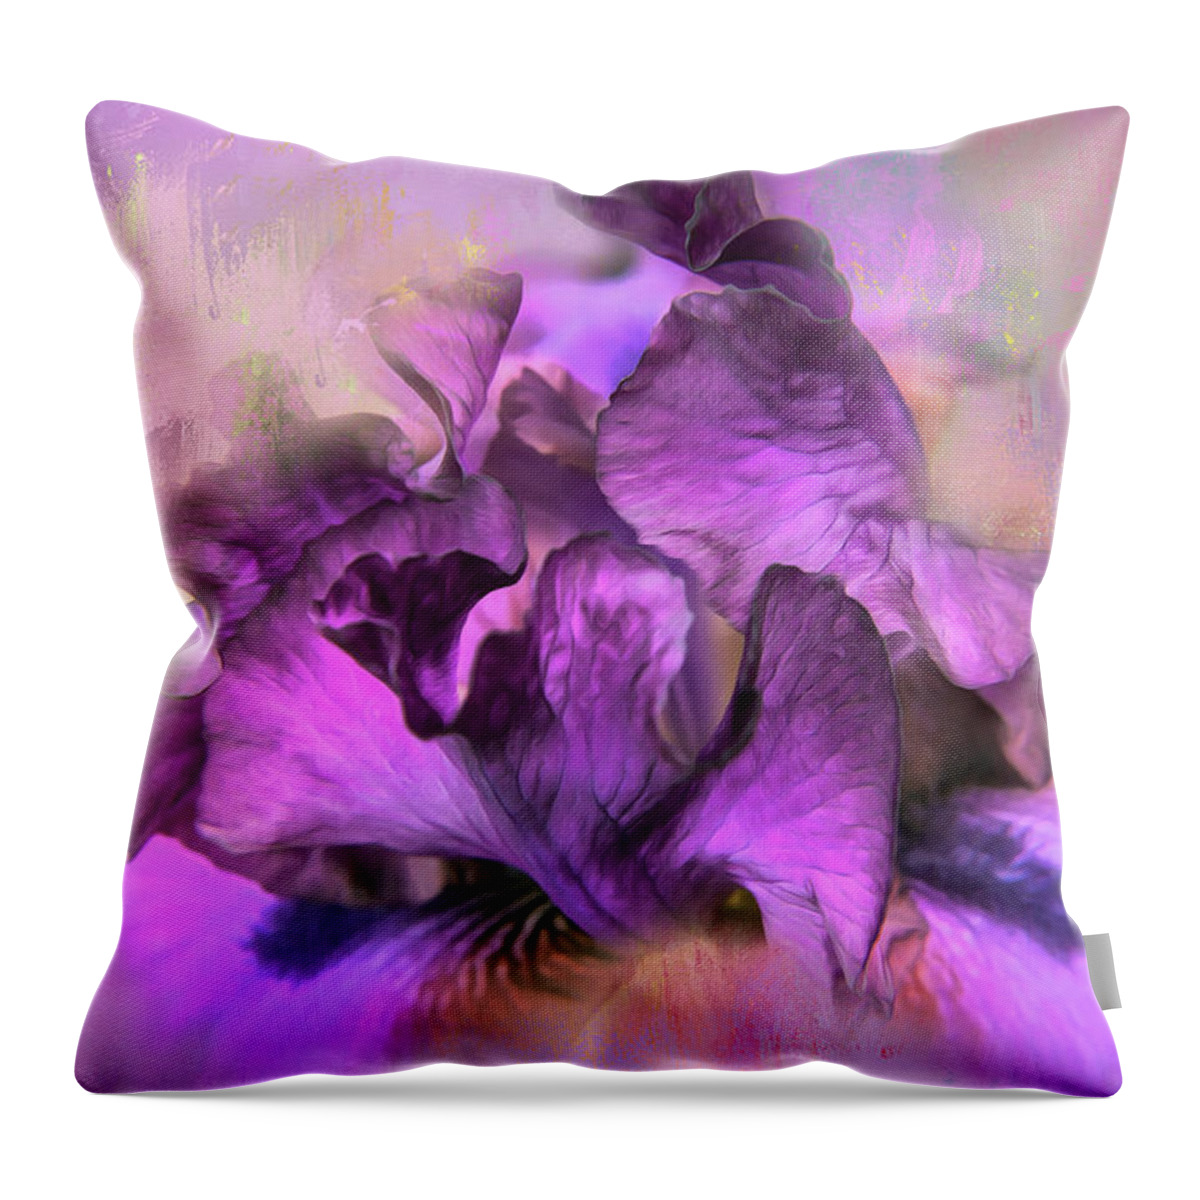 Iris Throw Pillow featuring the photograph Painted Iris by Theresa Tahara